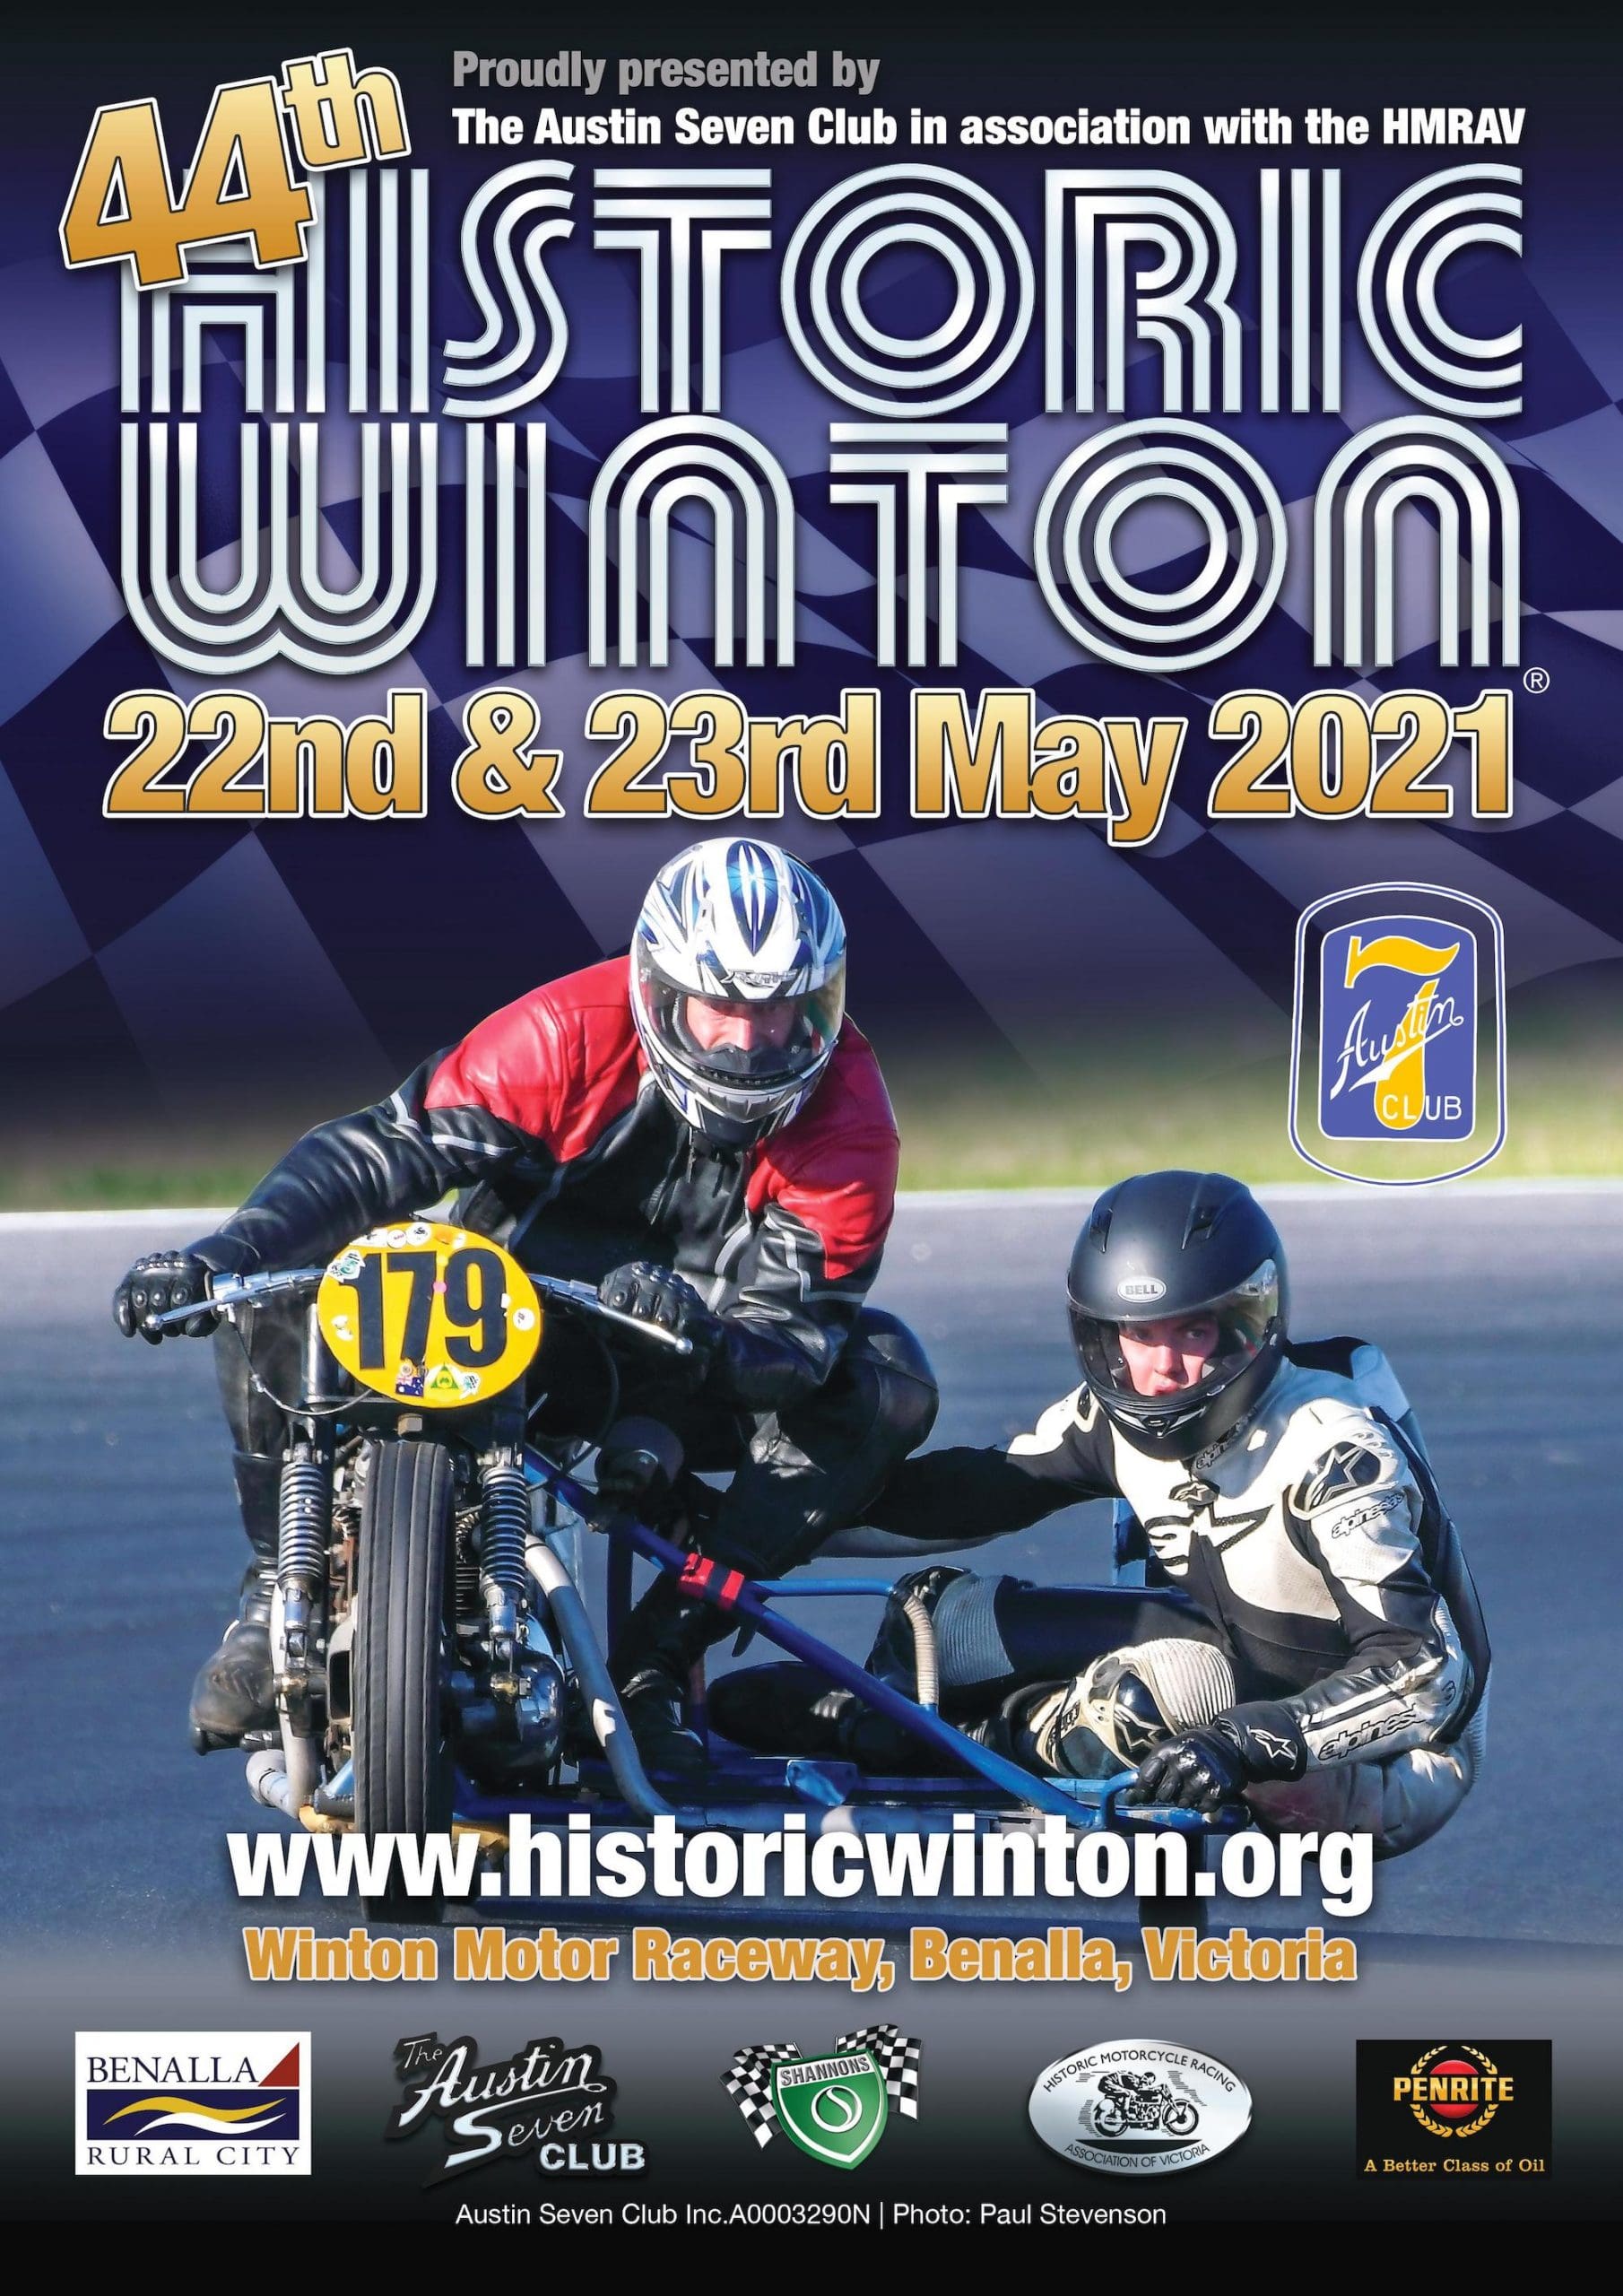 Historic Winton